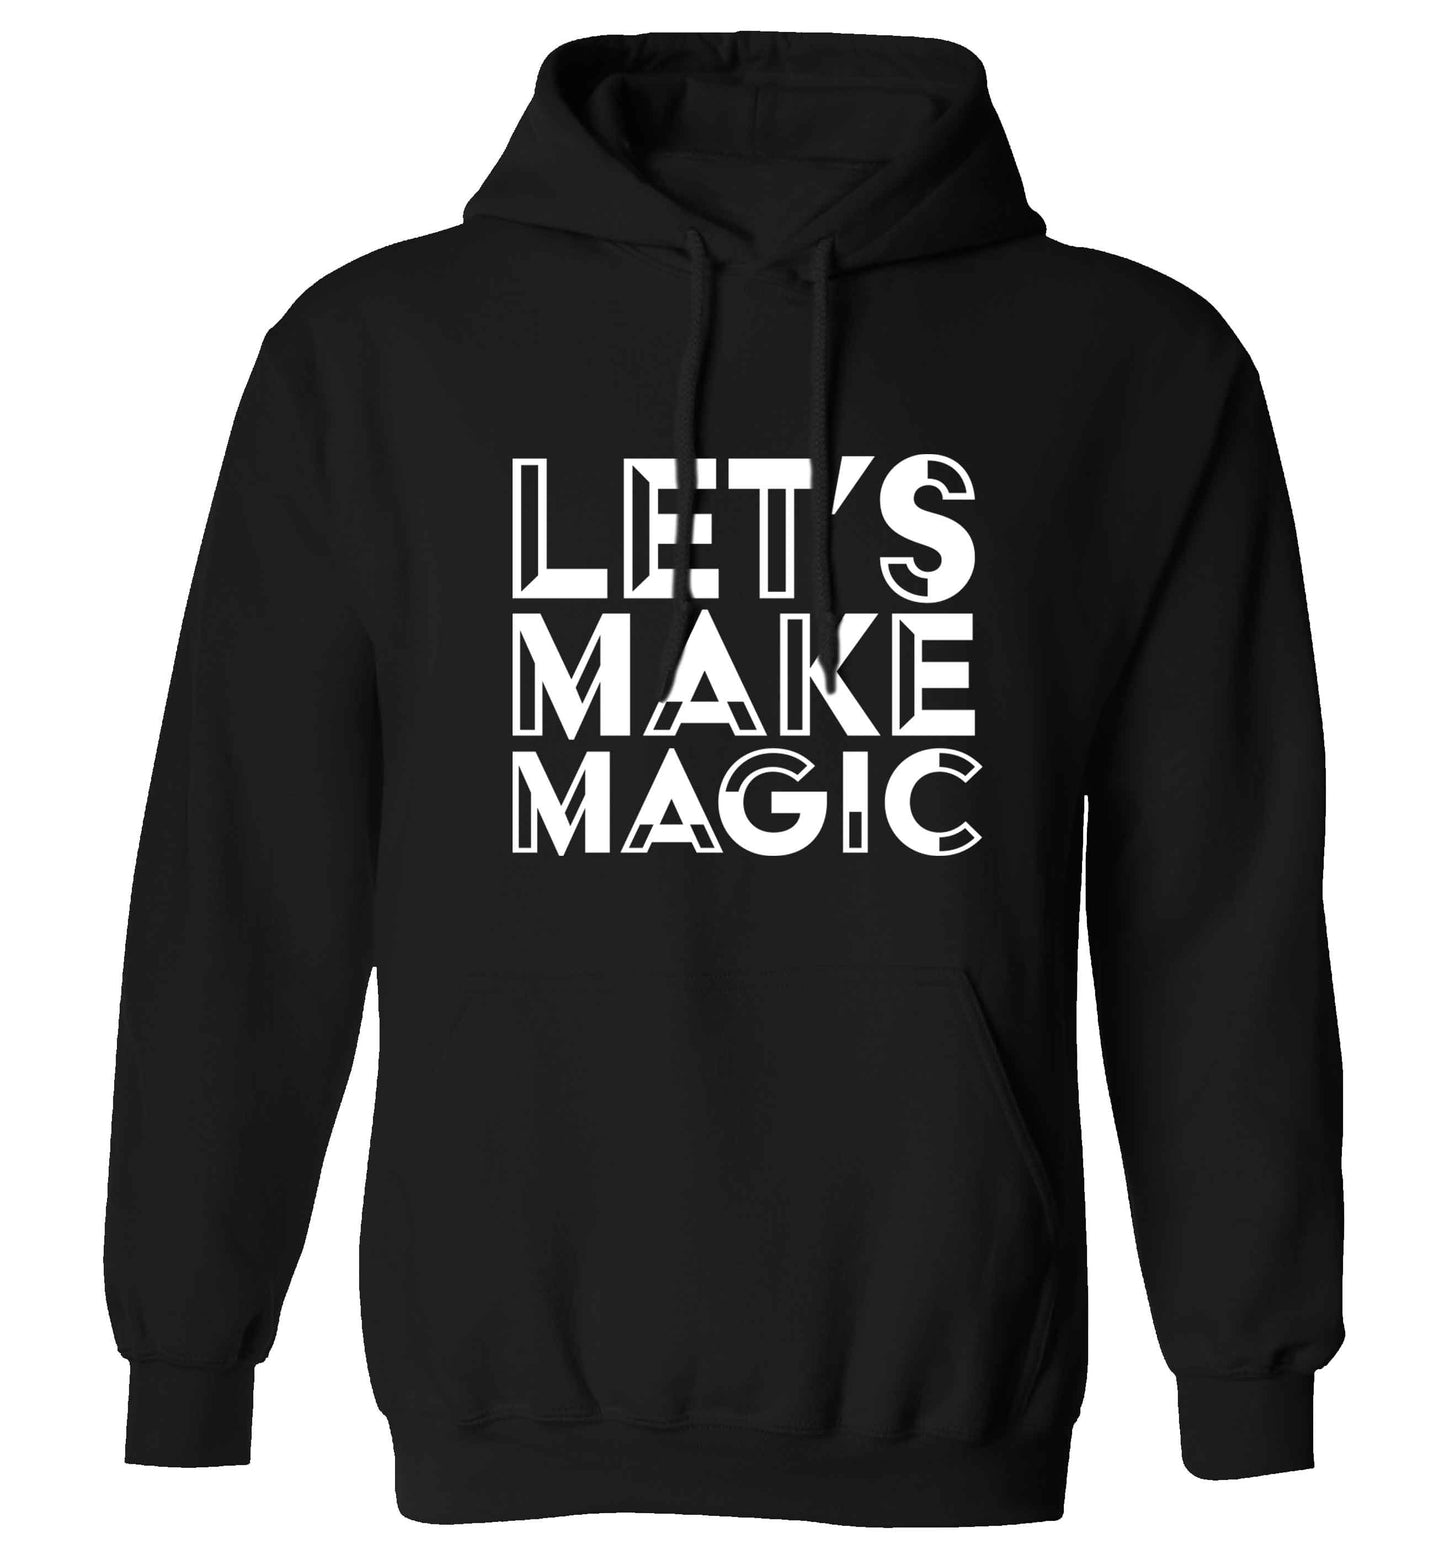 Let's make magic adults unisex black hoodie 2XL